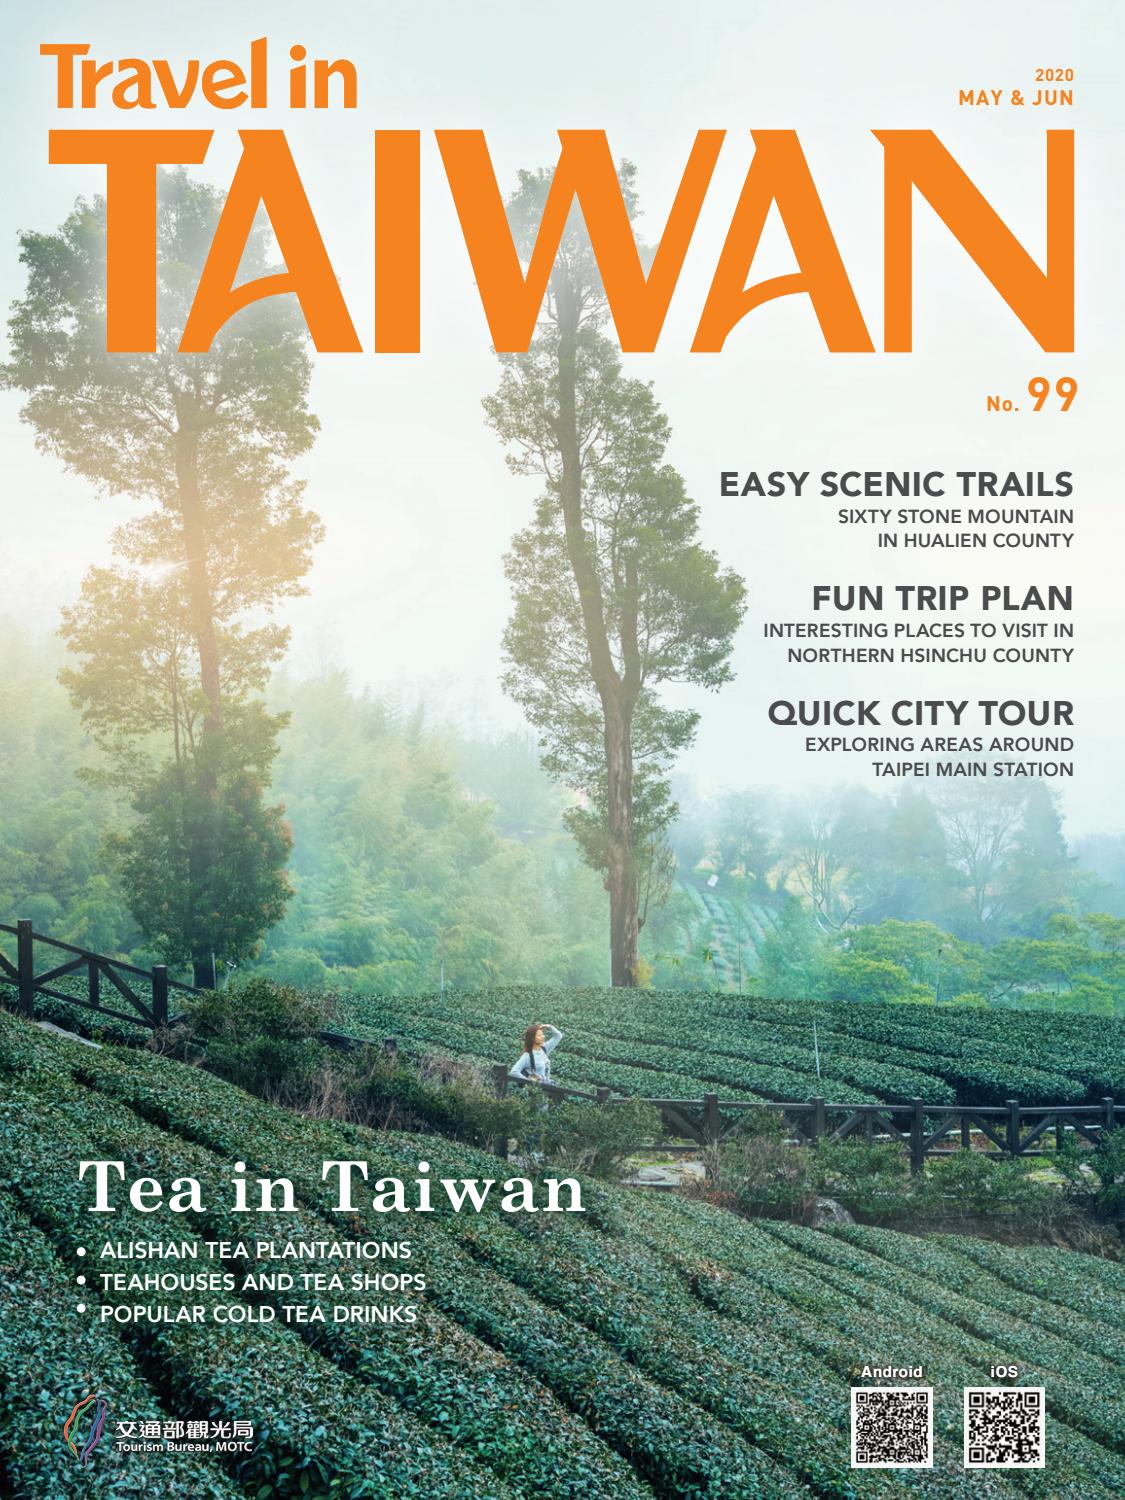 Fireplace Warehouse Etc Beautiful Travel In Taiwan No 99 2020 5 6 by Travel In Taiwan issuu